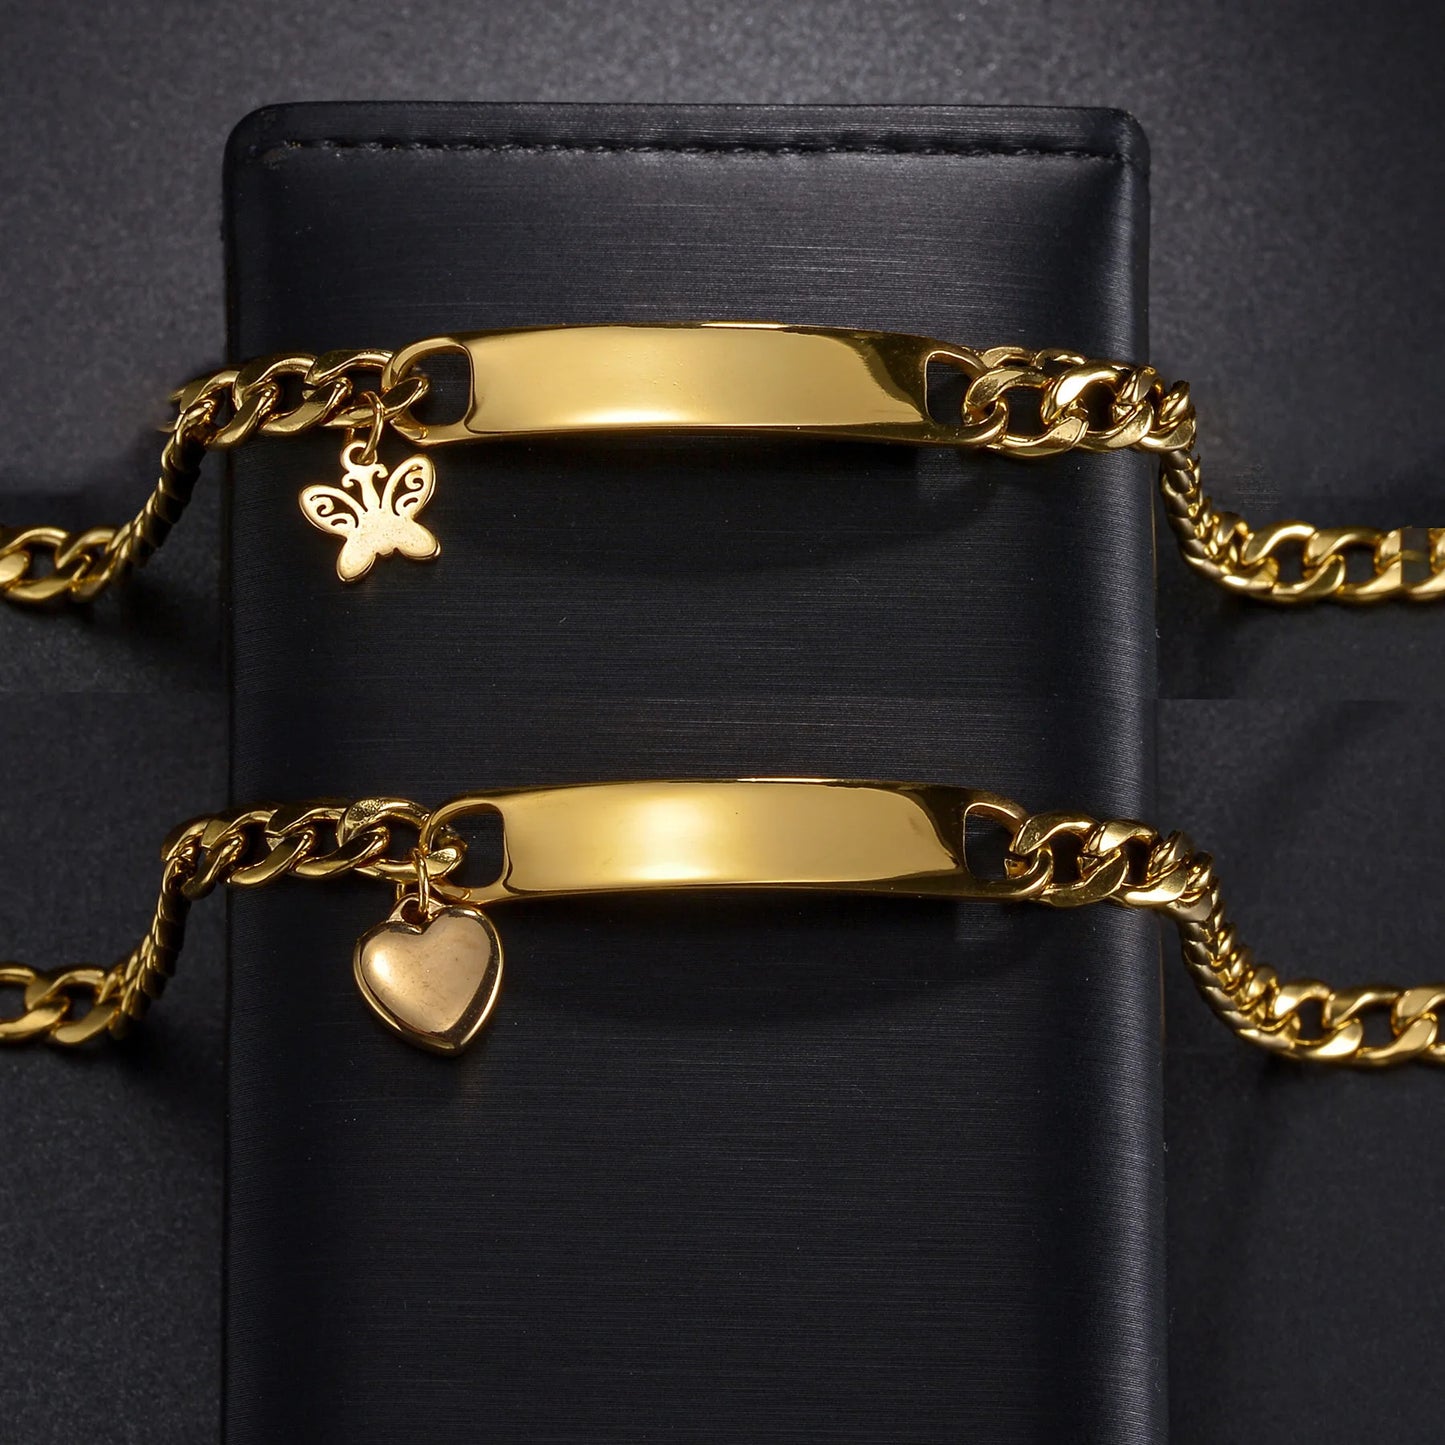 Women Adjustable Cuban Chain Jewelry Gift